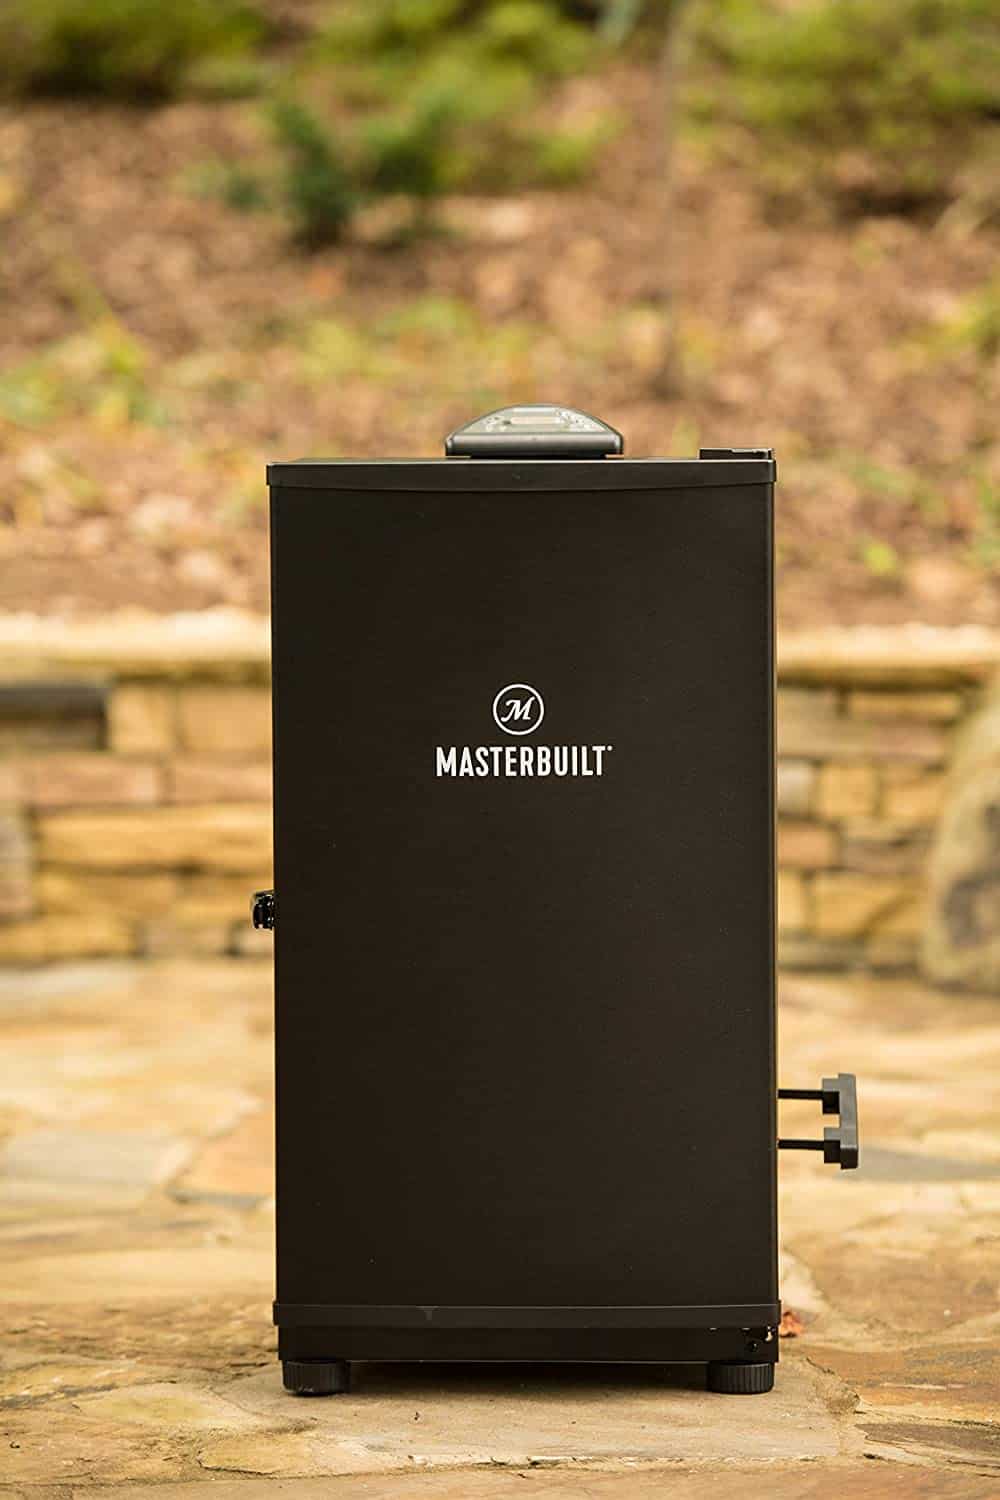 Best Digital Electric smoker for beginners: Masterbuilt MB20071117